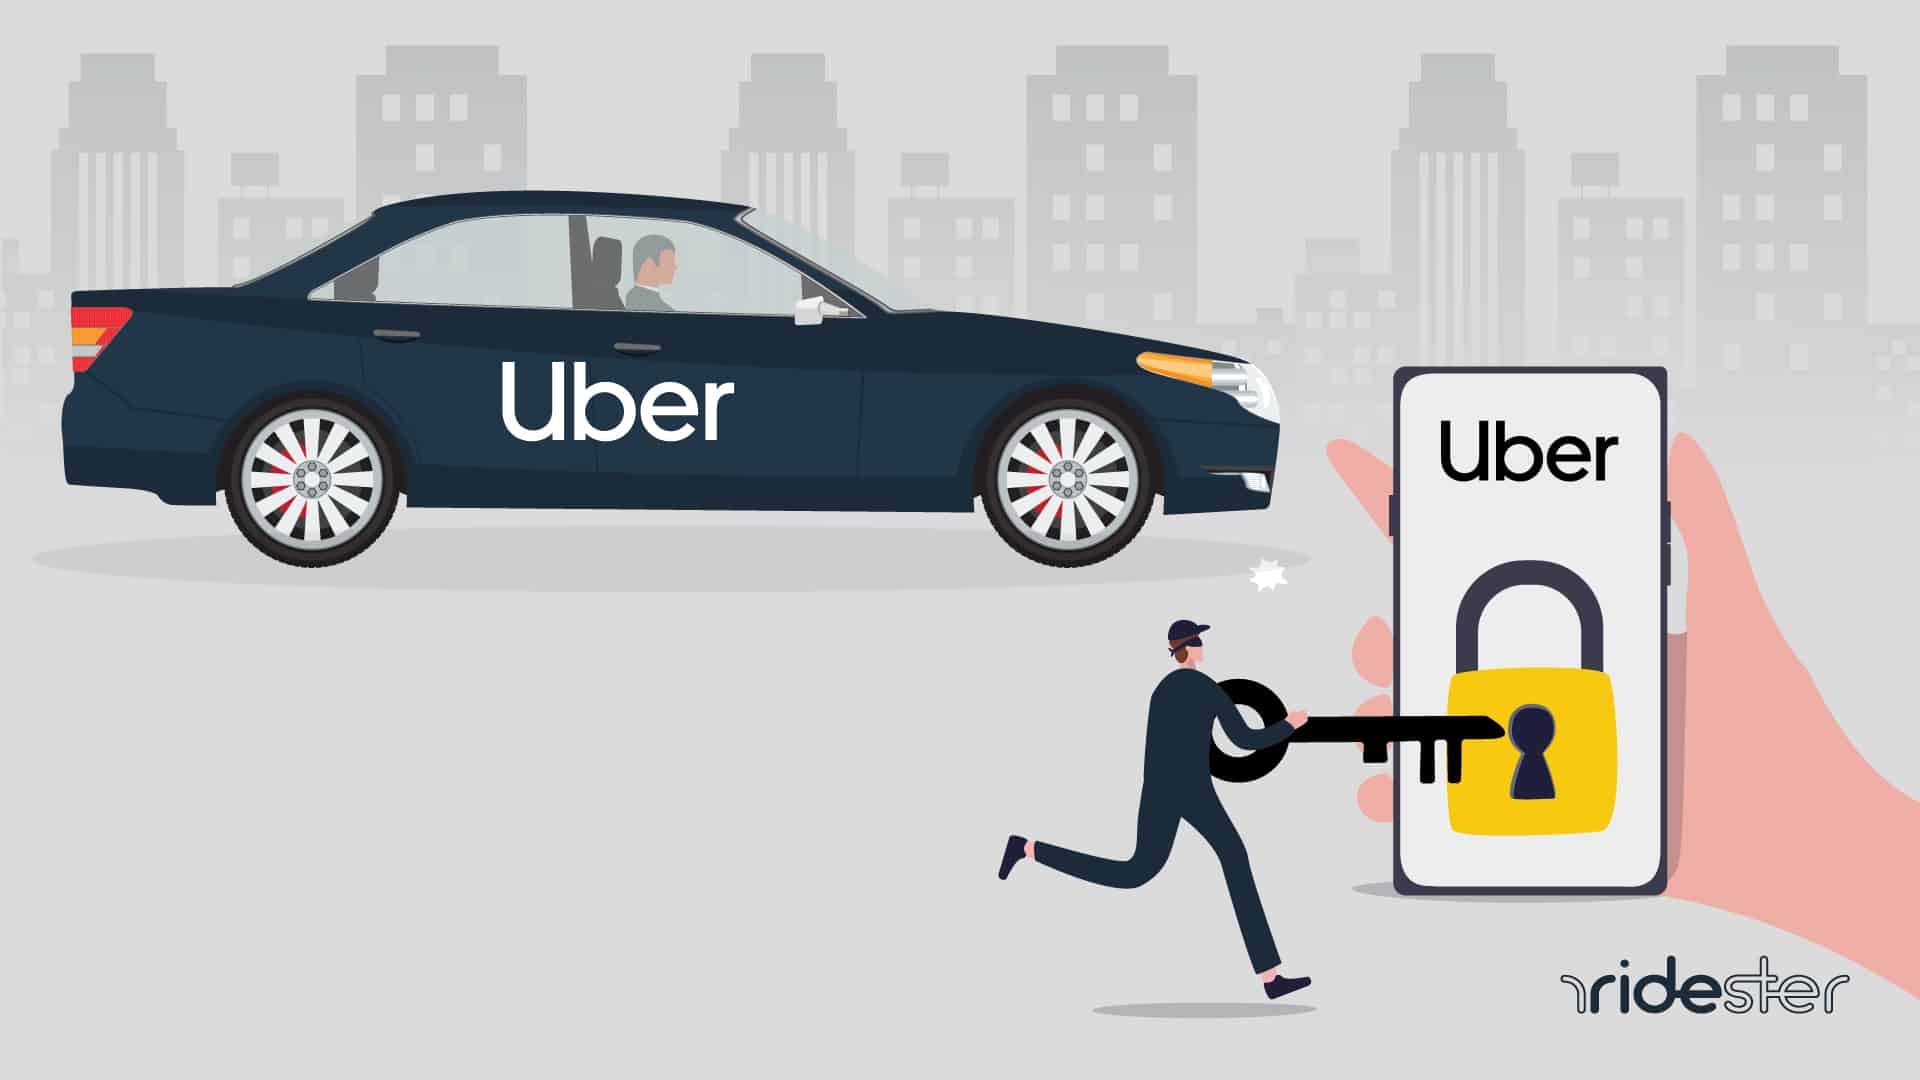 hacker holding laptop in front of Uber ride - header image for uber free ride hack post